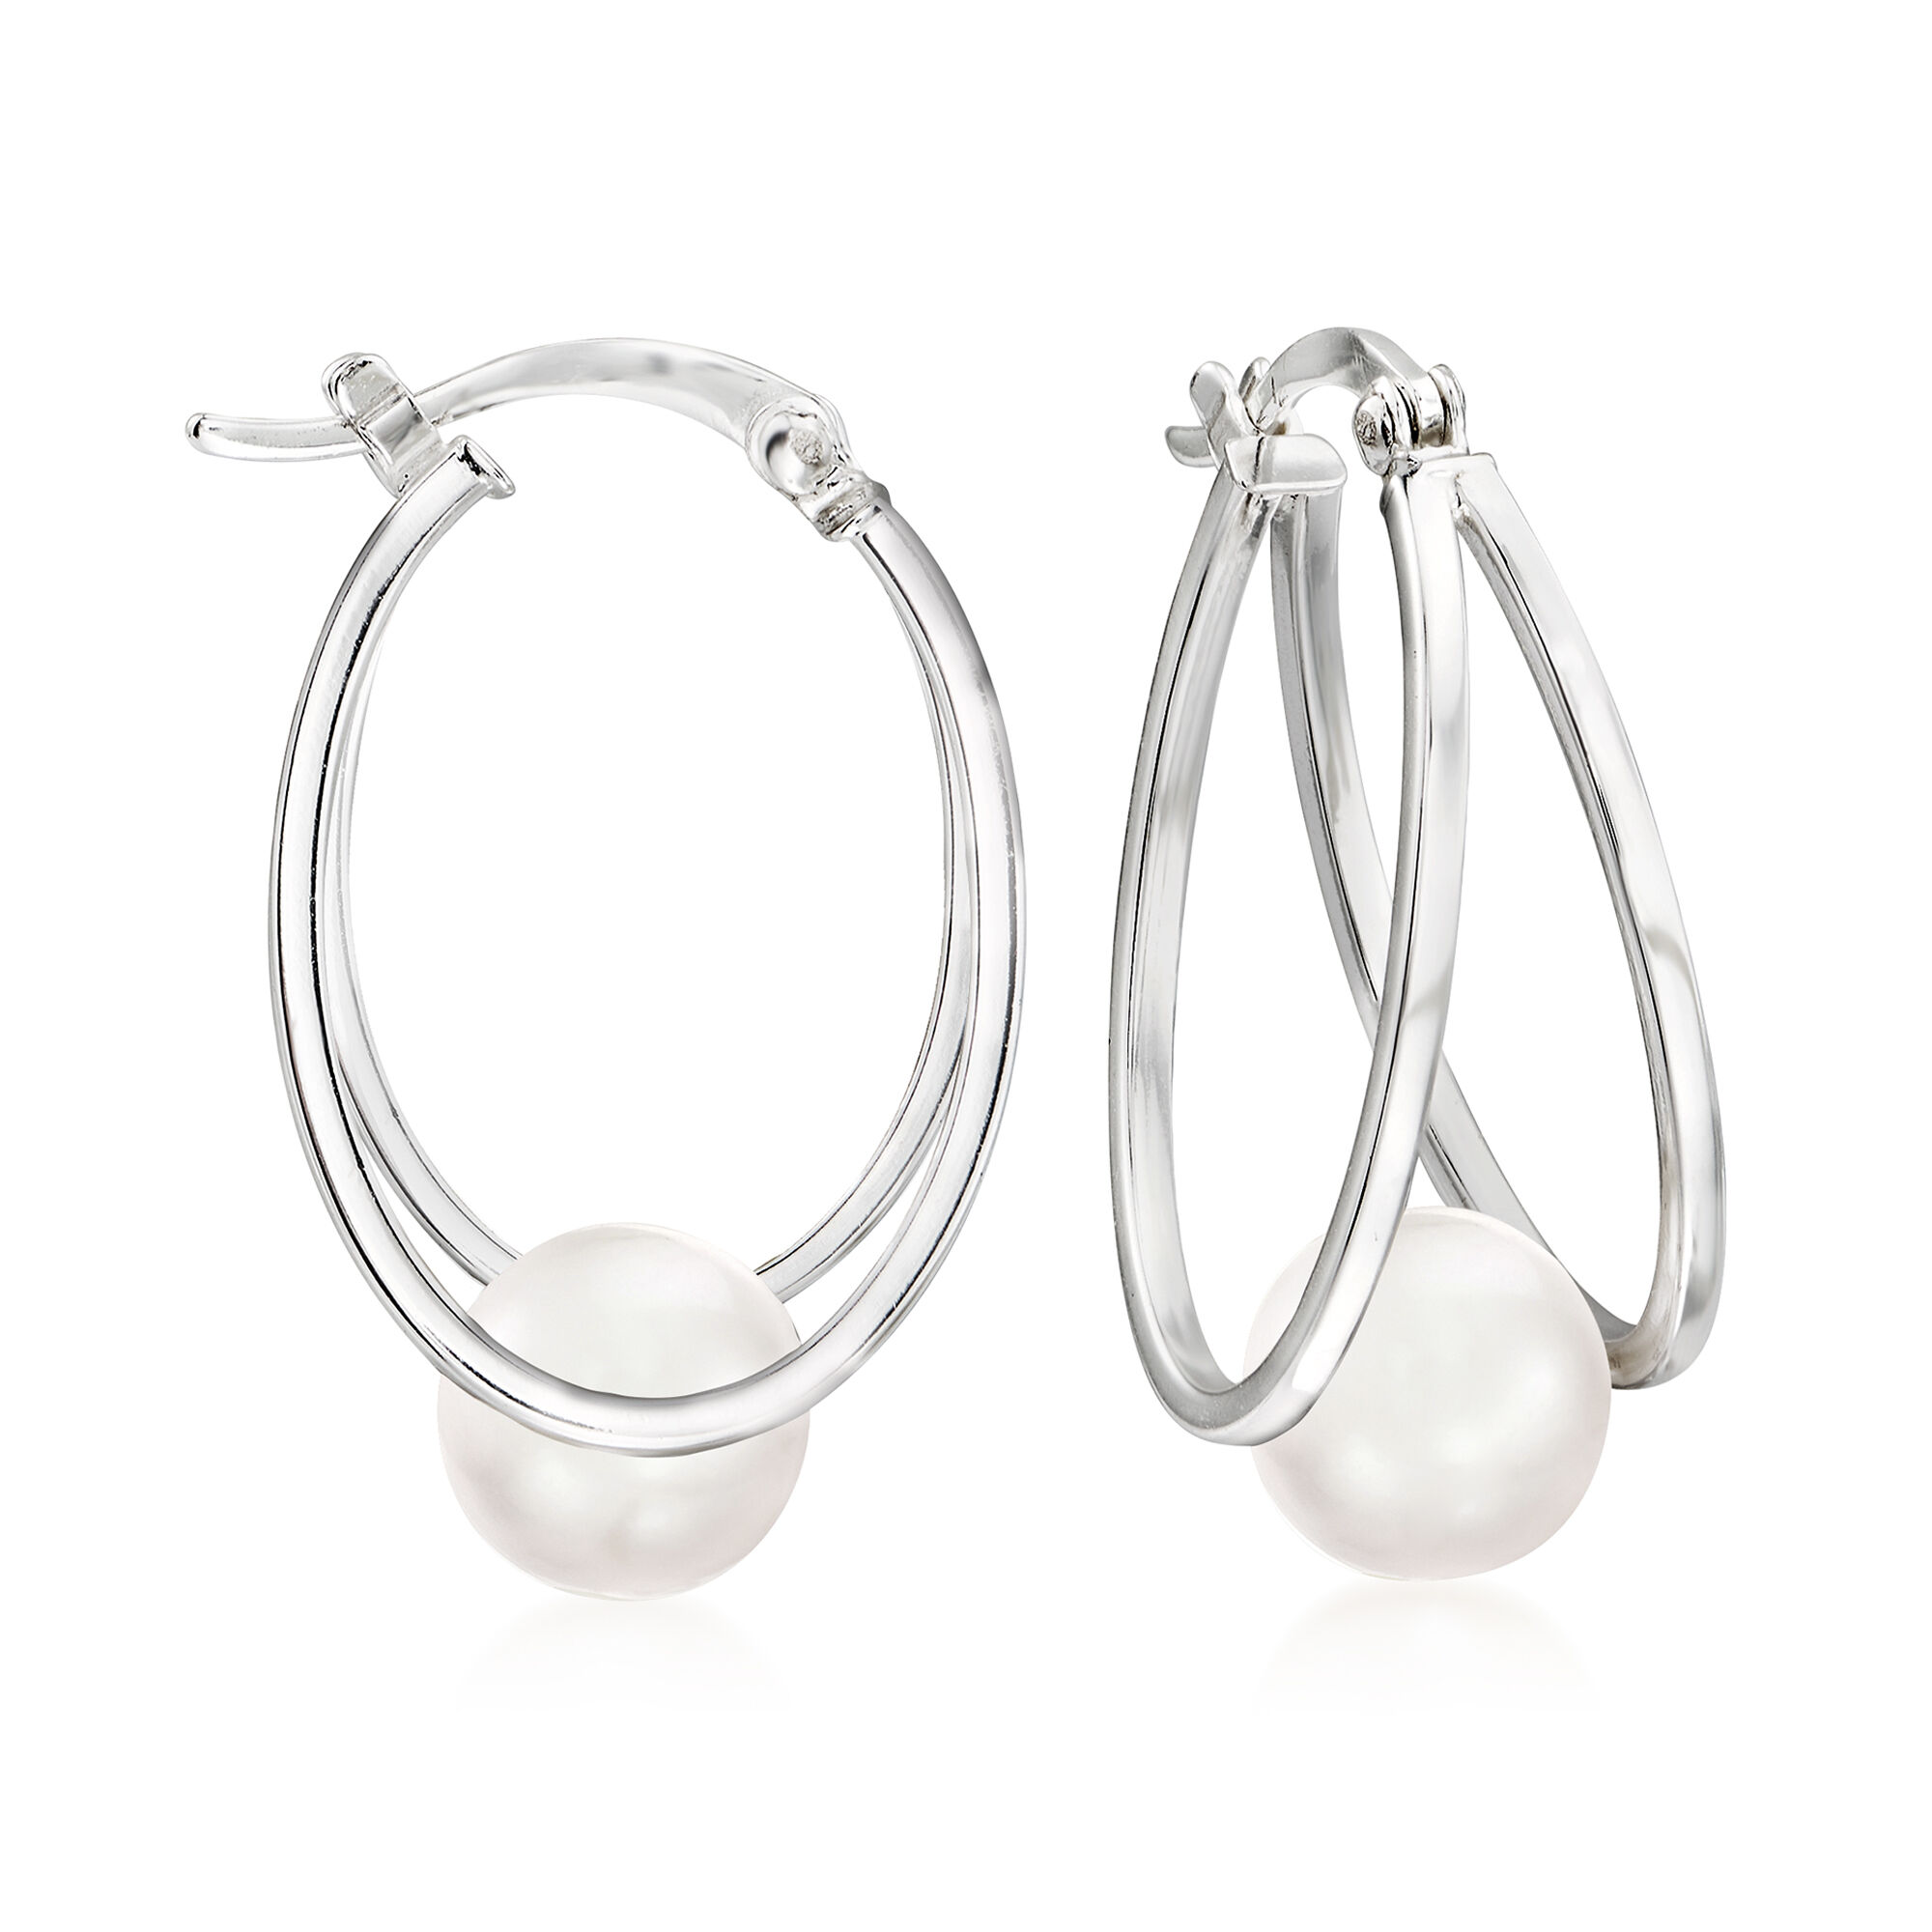 8-9mm Cultured Pearl Double-Hoop Earrings in Sterling Silver. 1 